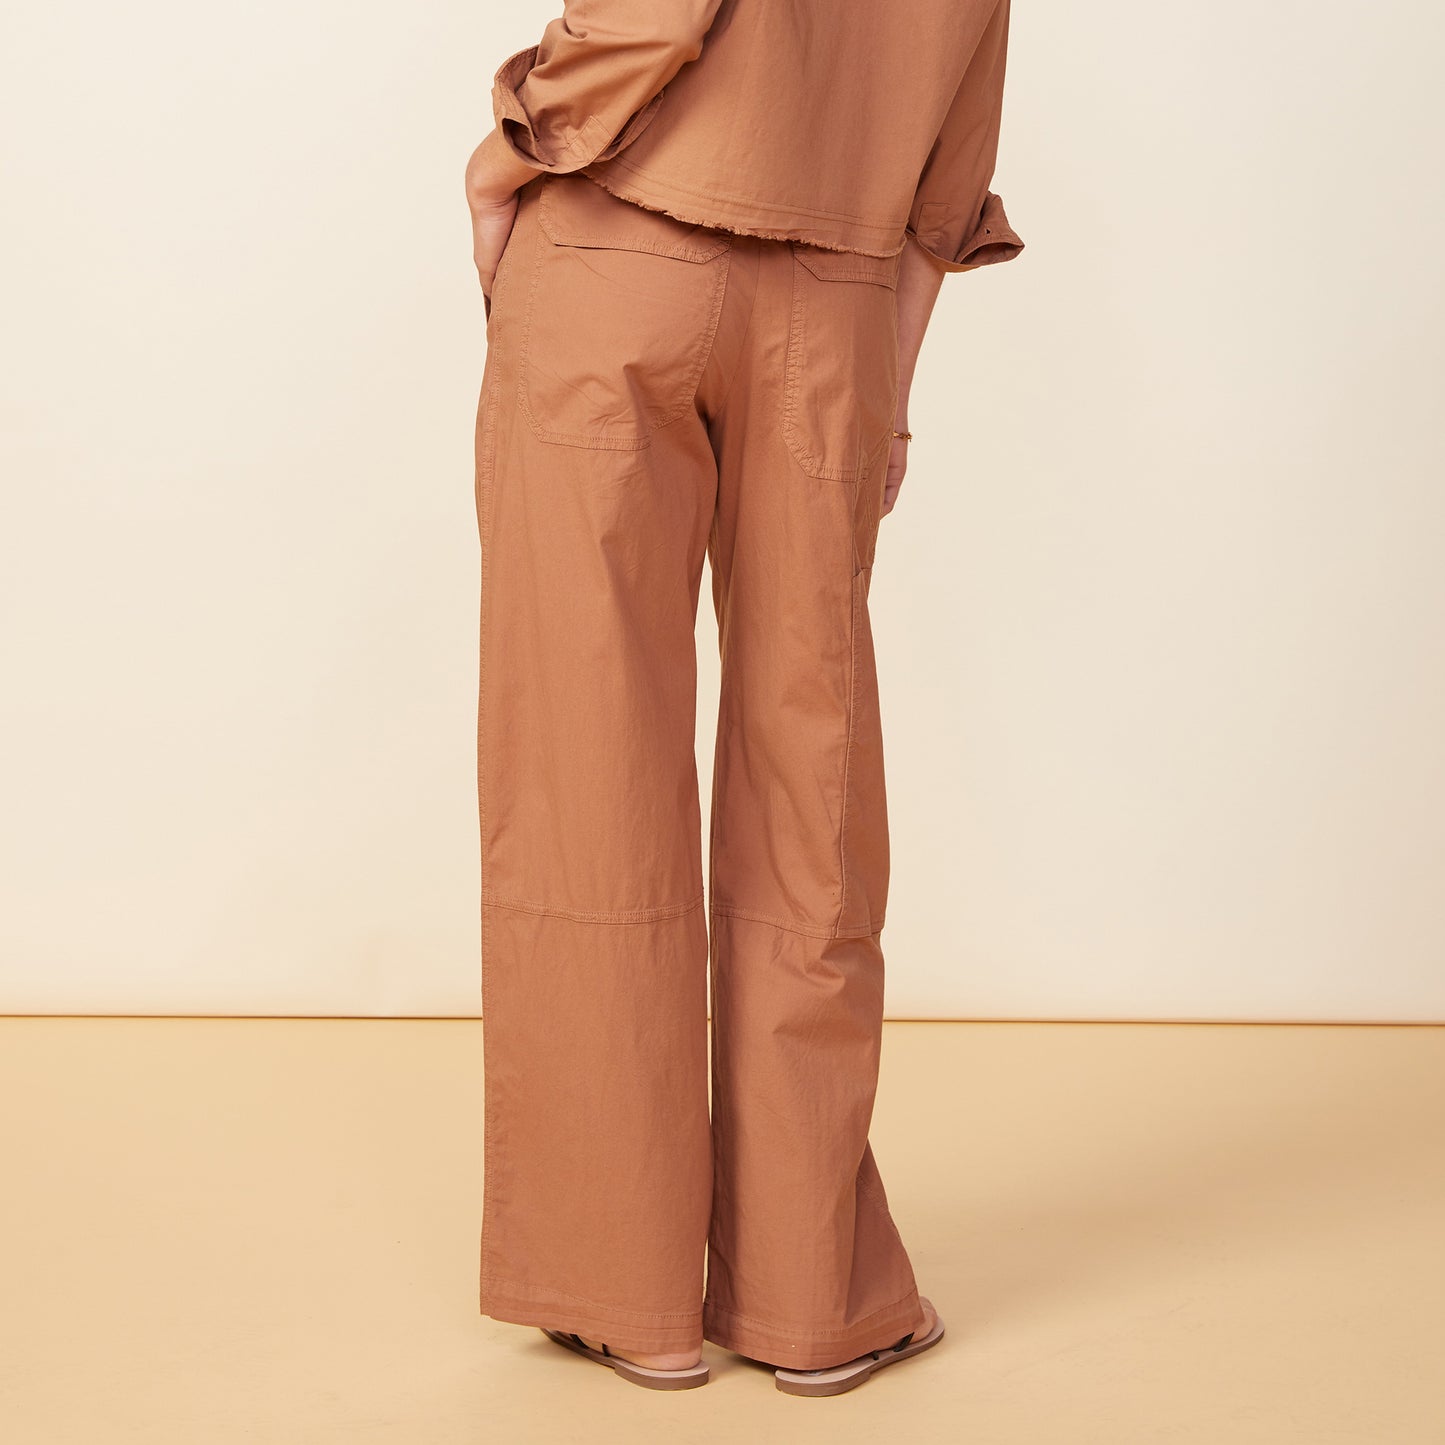 Back view of model wearing the poplin pocket pants in sahara.